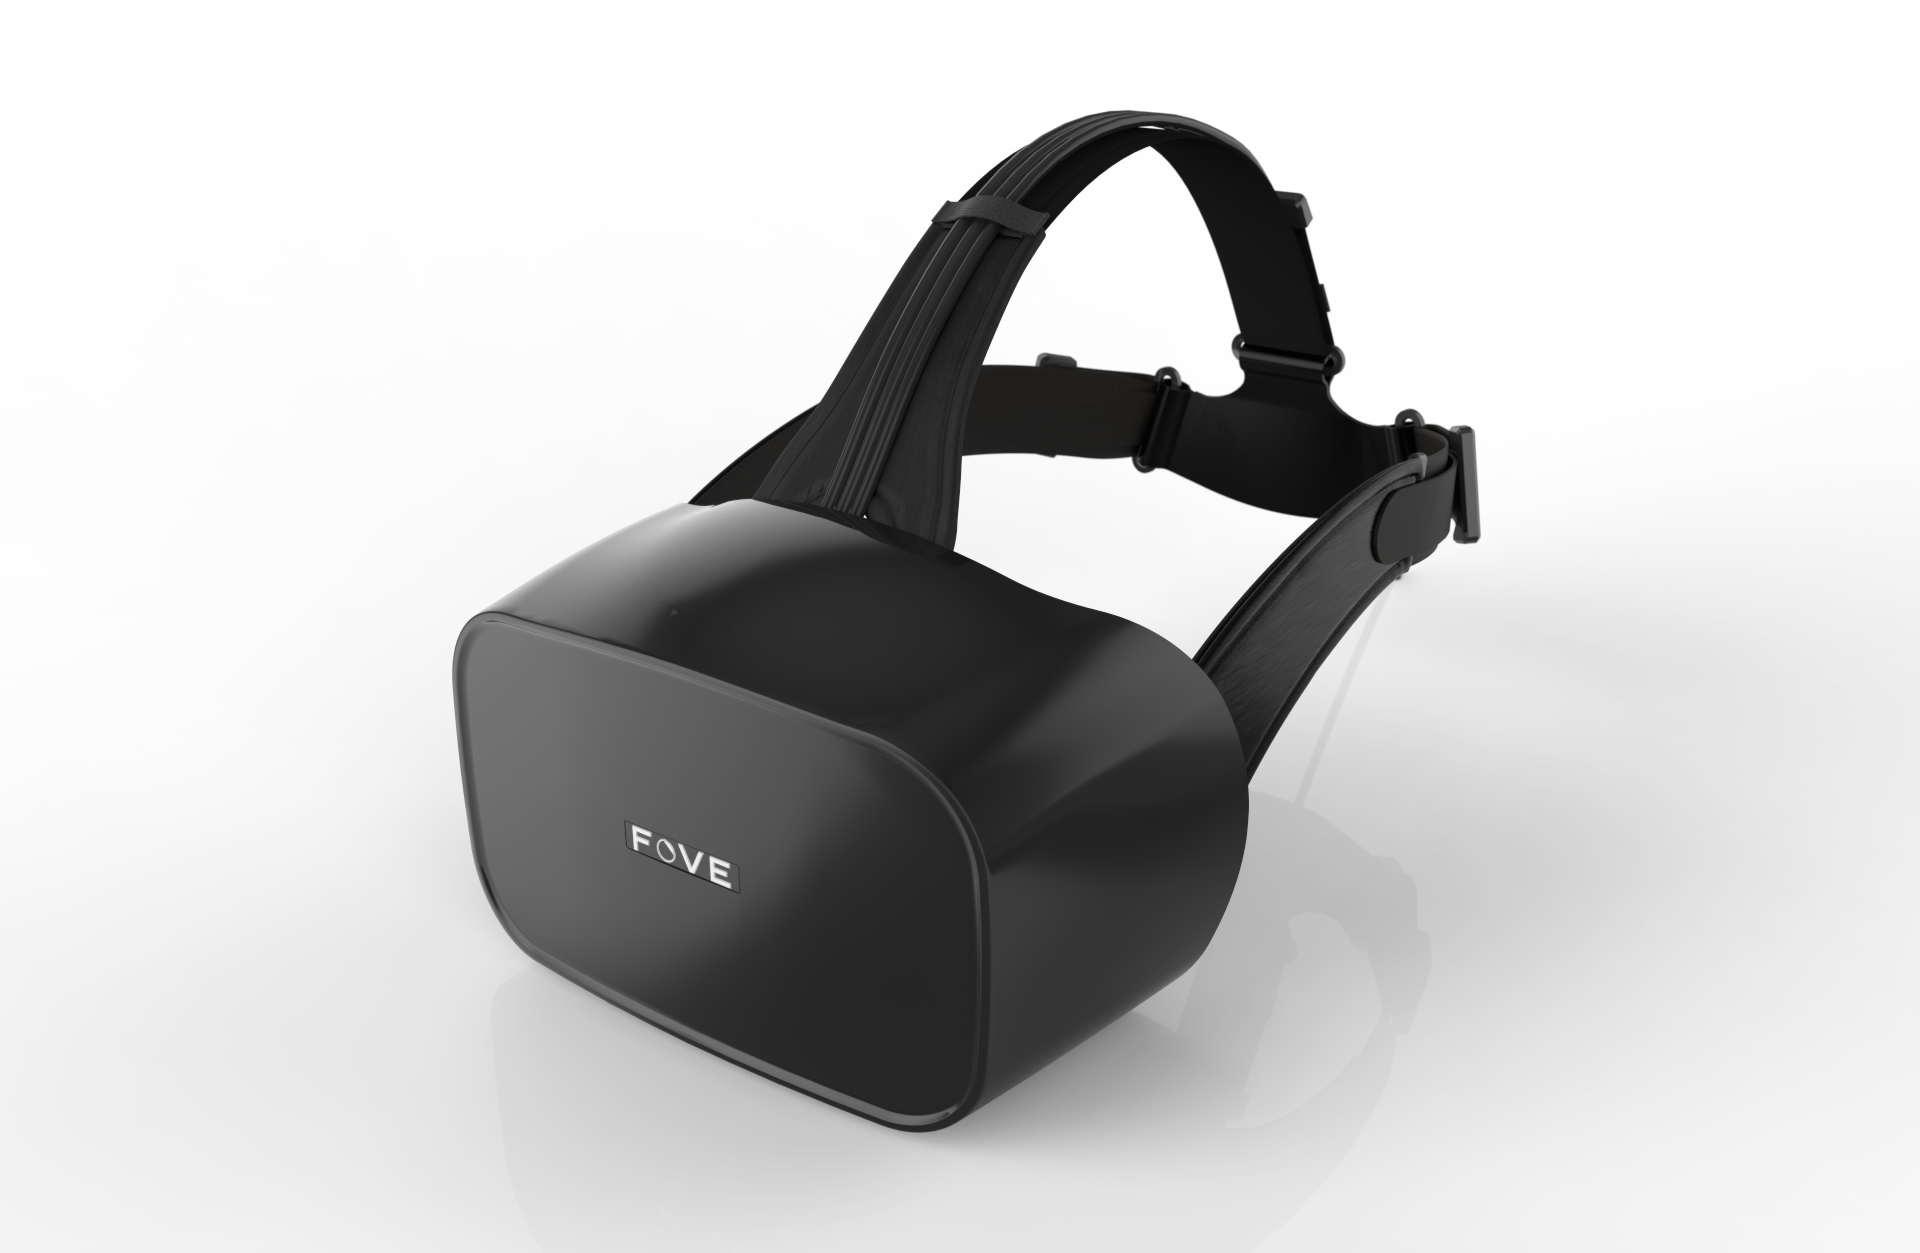 FOVE 0 Eye Tracking VR Headset (Black)